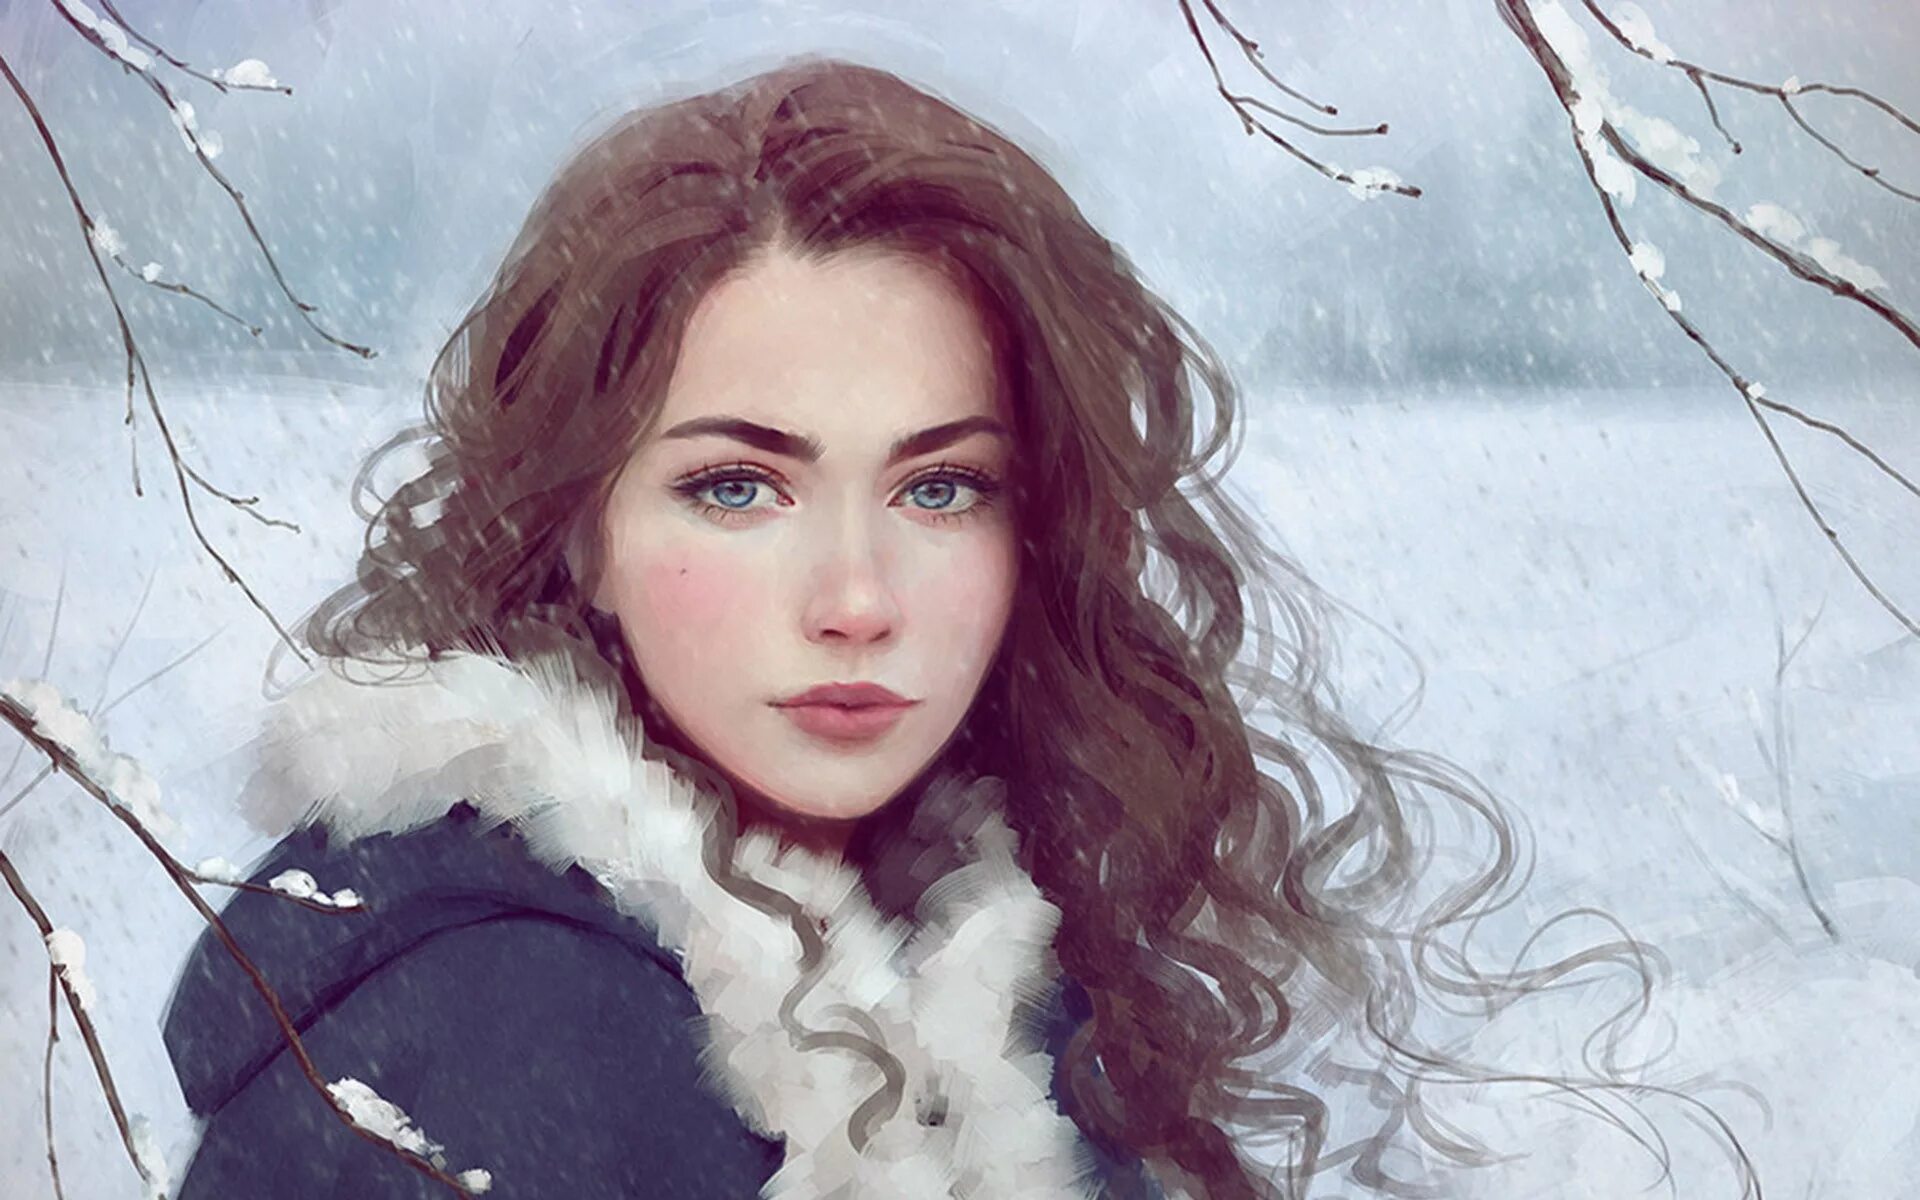 Model painting. Зимний портрет. Девушка зимой. Зимний фон для портрета. Портрет красавицы зимы.